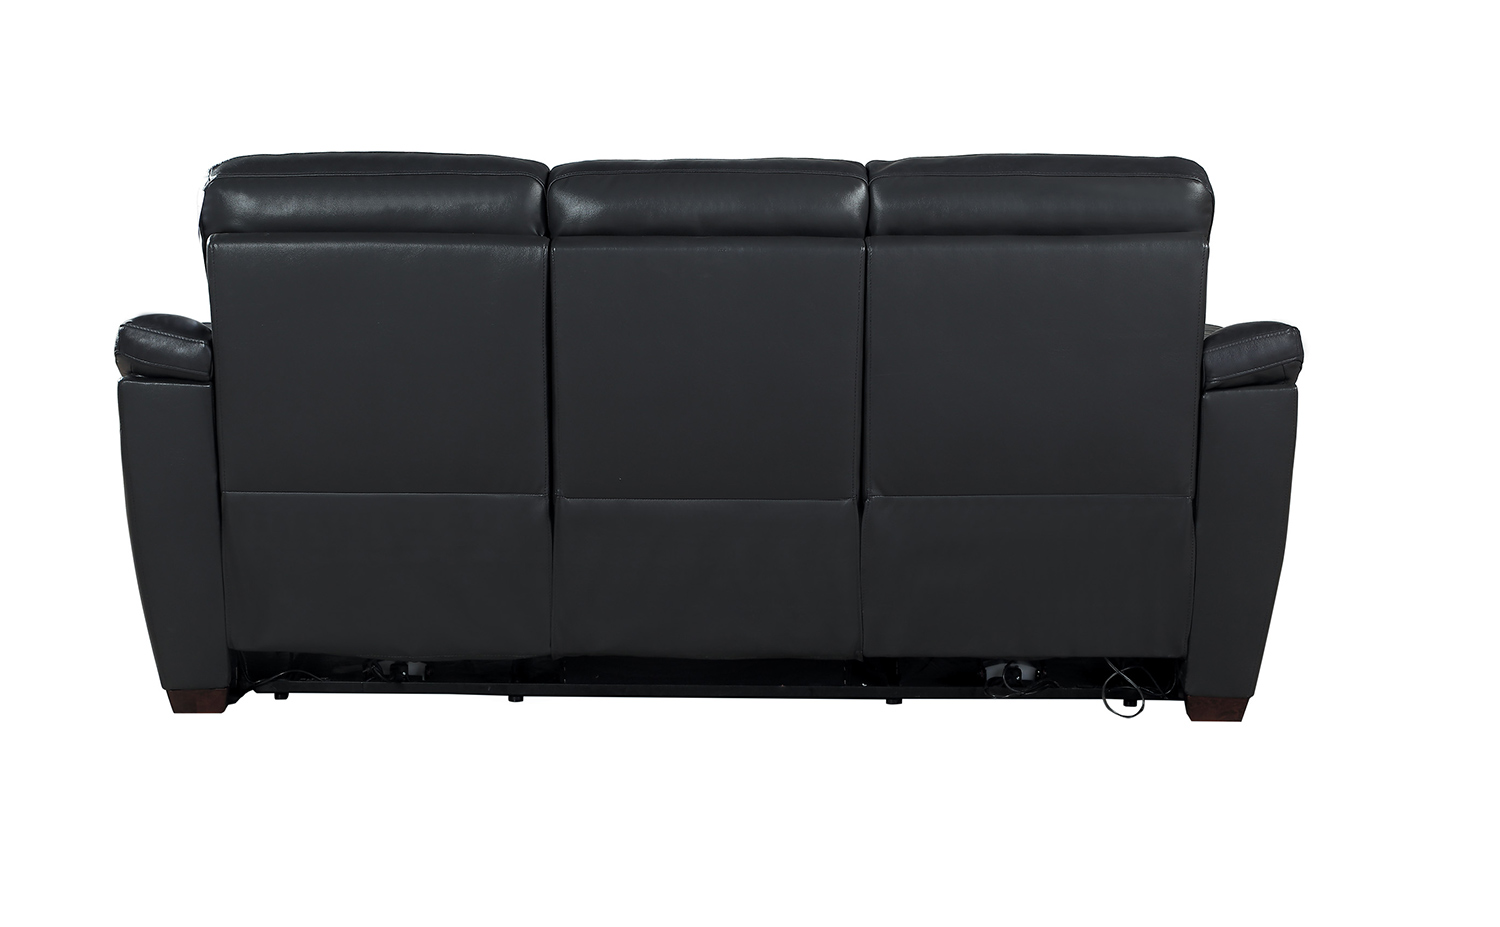 Homelegance Renzo Power Double Reclining Sofa - Dark Gray